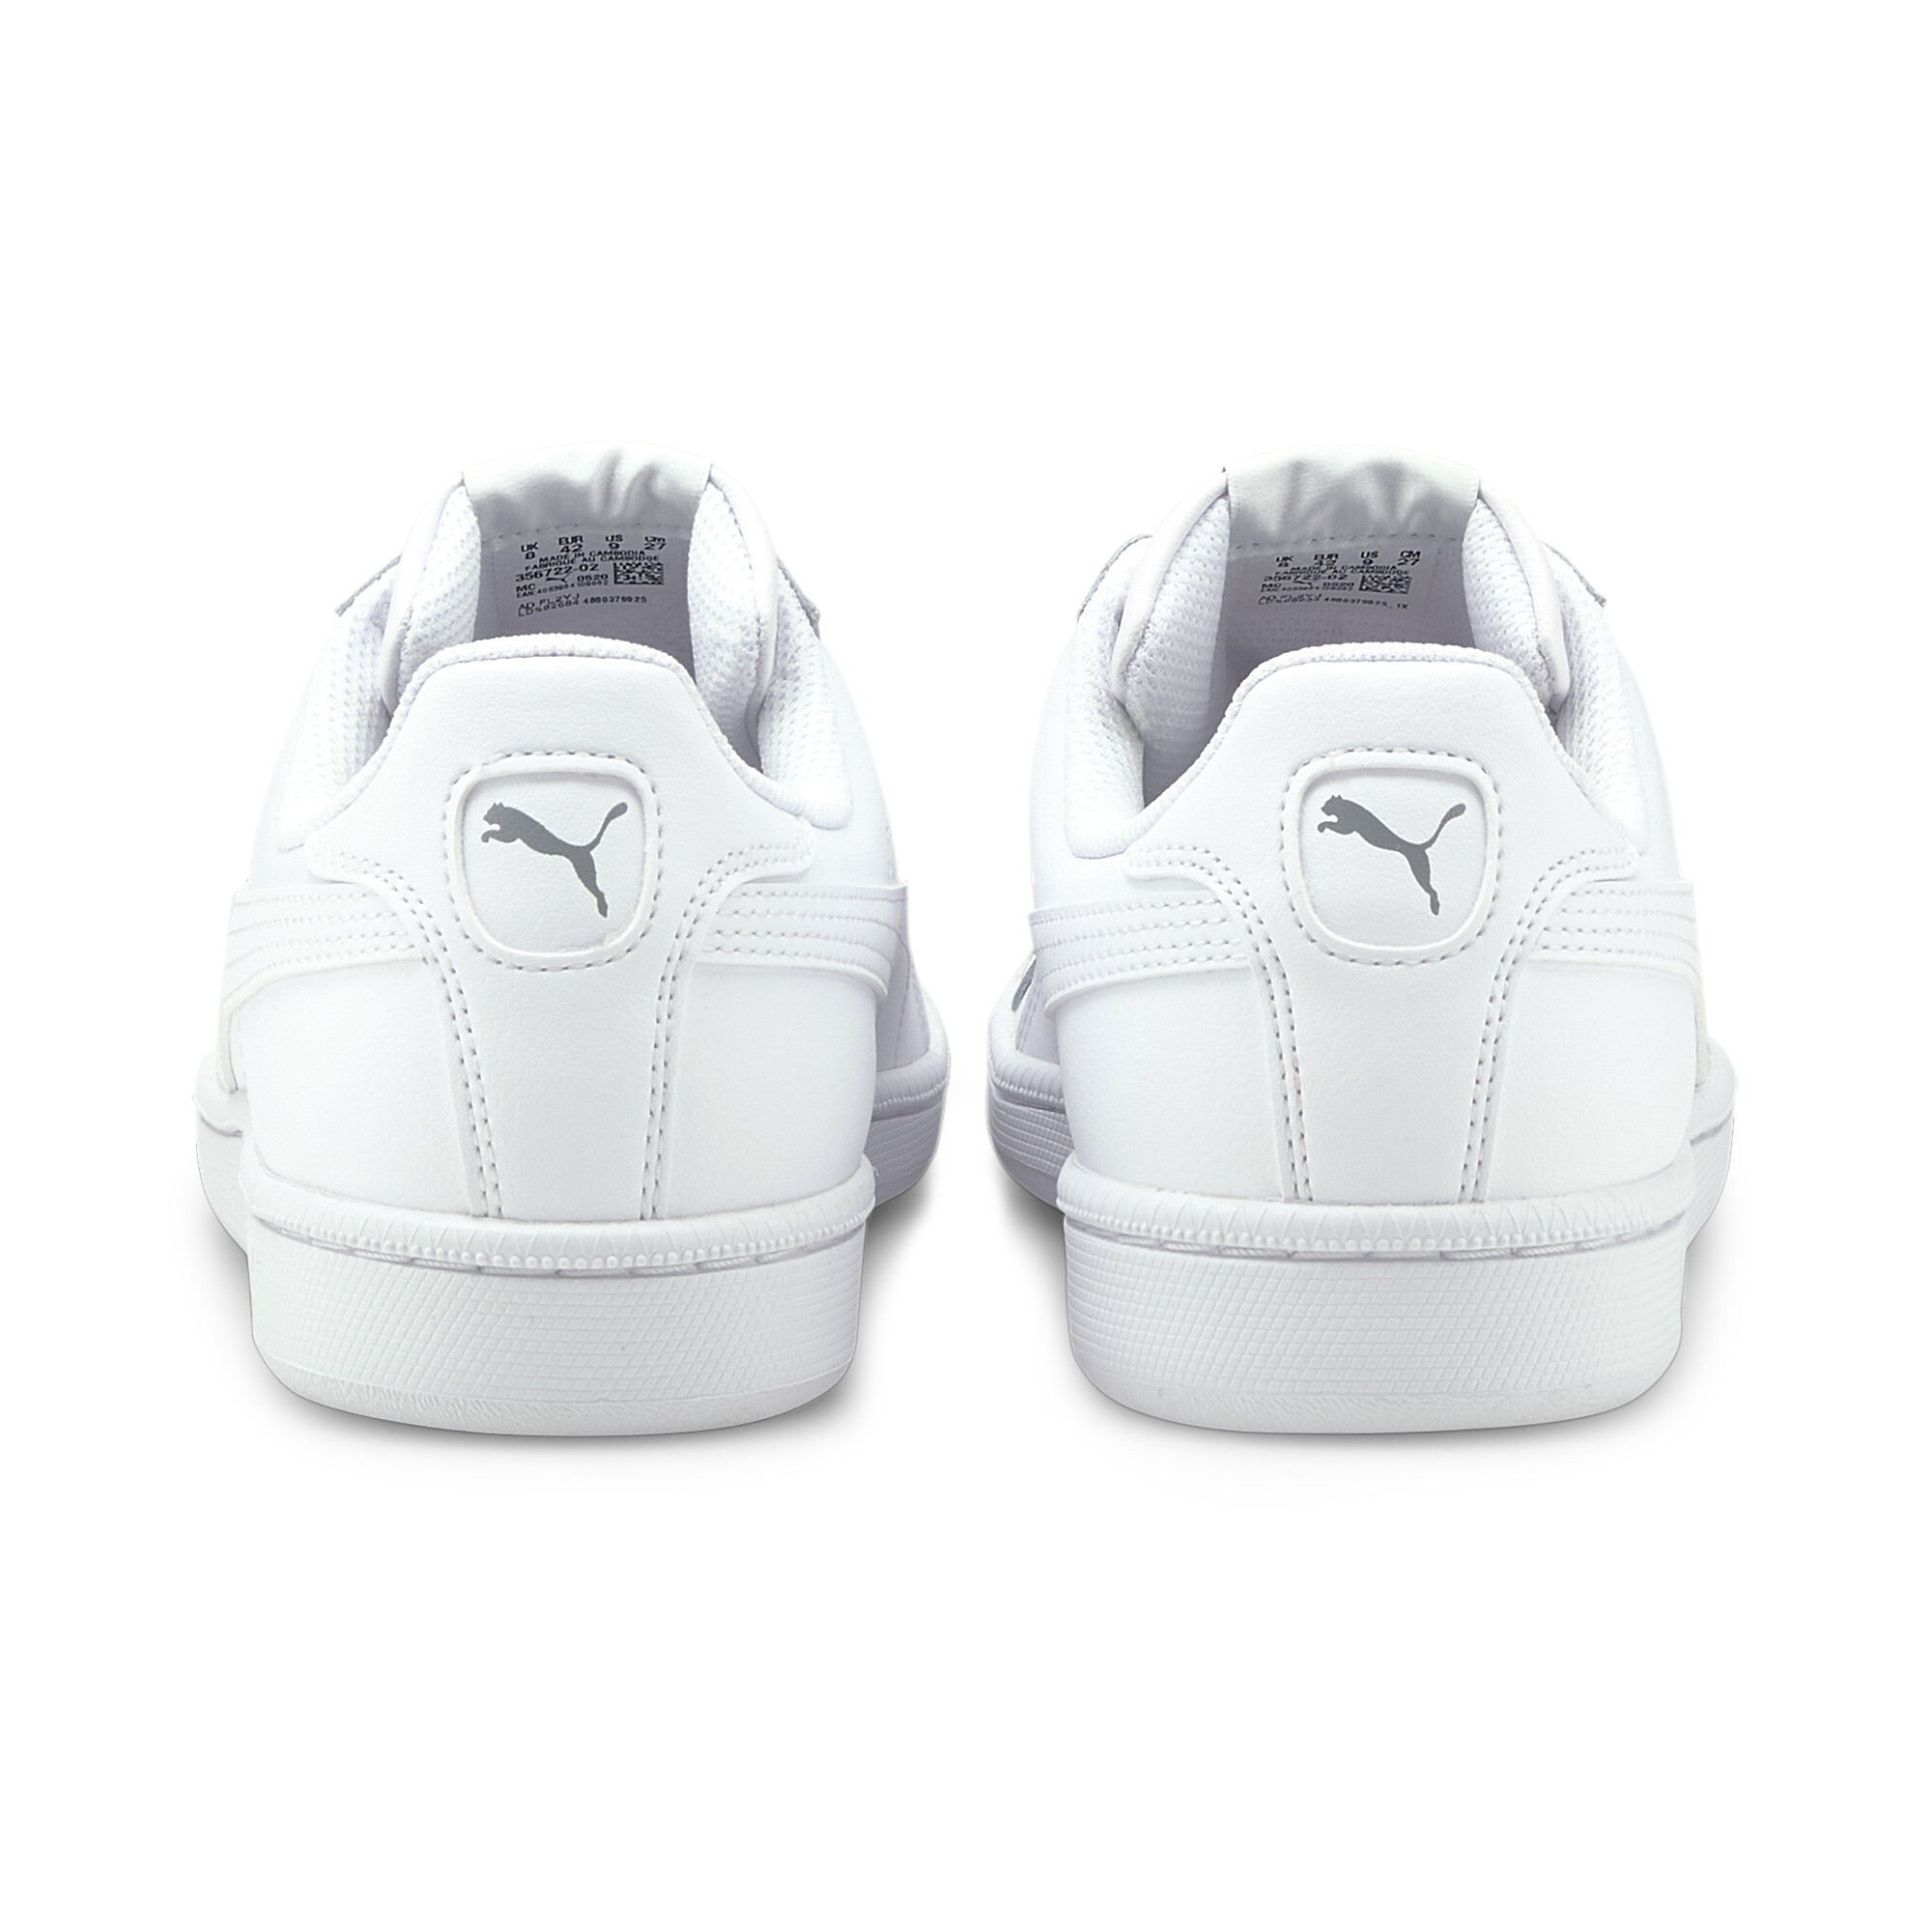 Indexbild 26 - PUMA Smash Trainers Schuhe Sneakers Sport Classics Unisex Neu